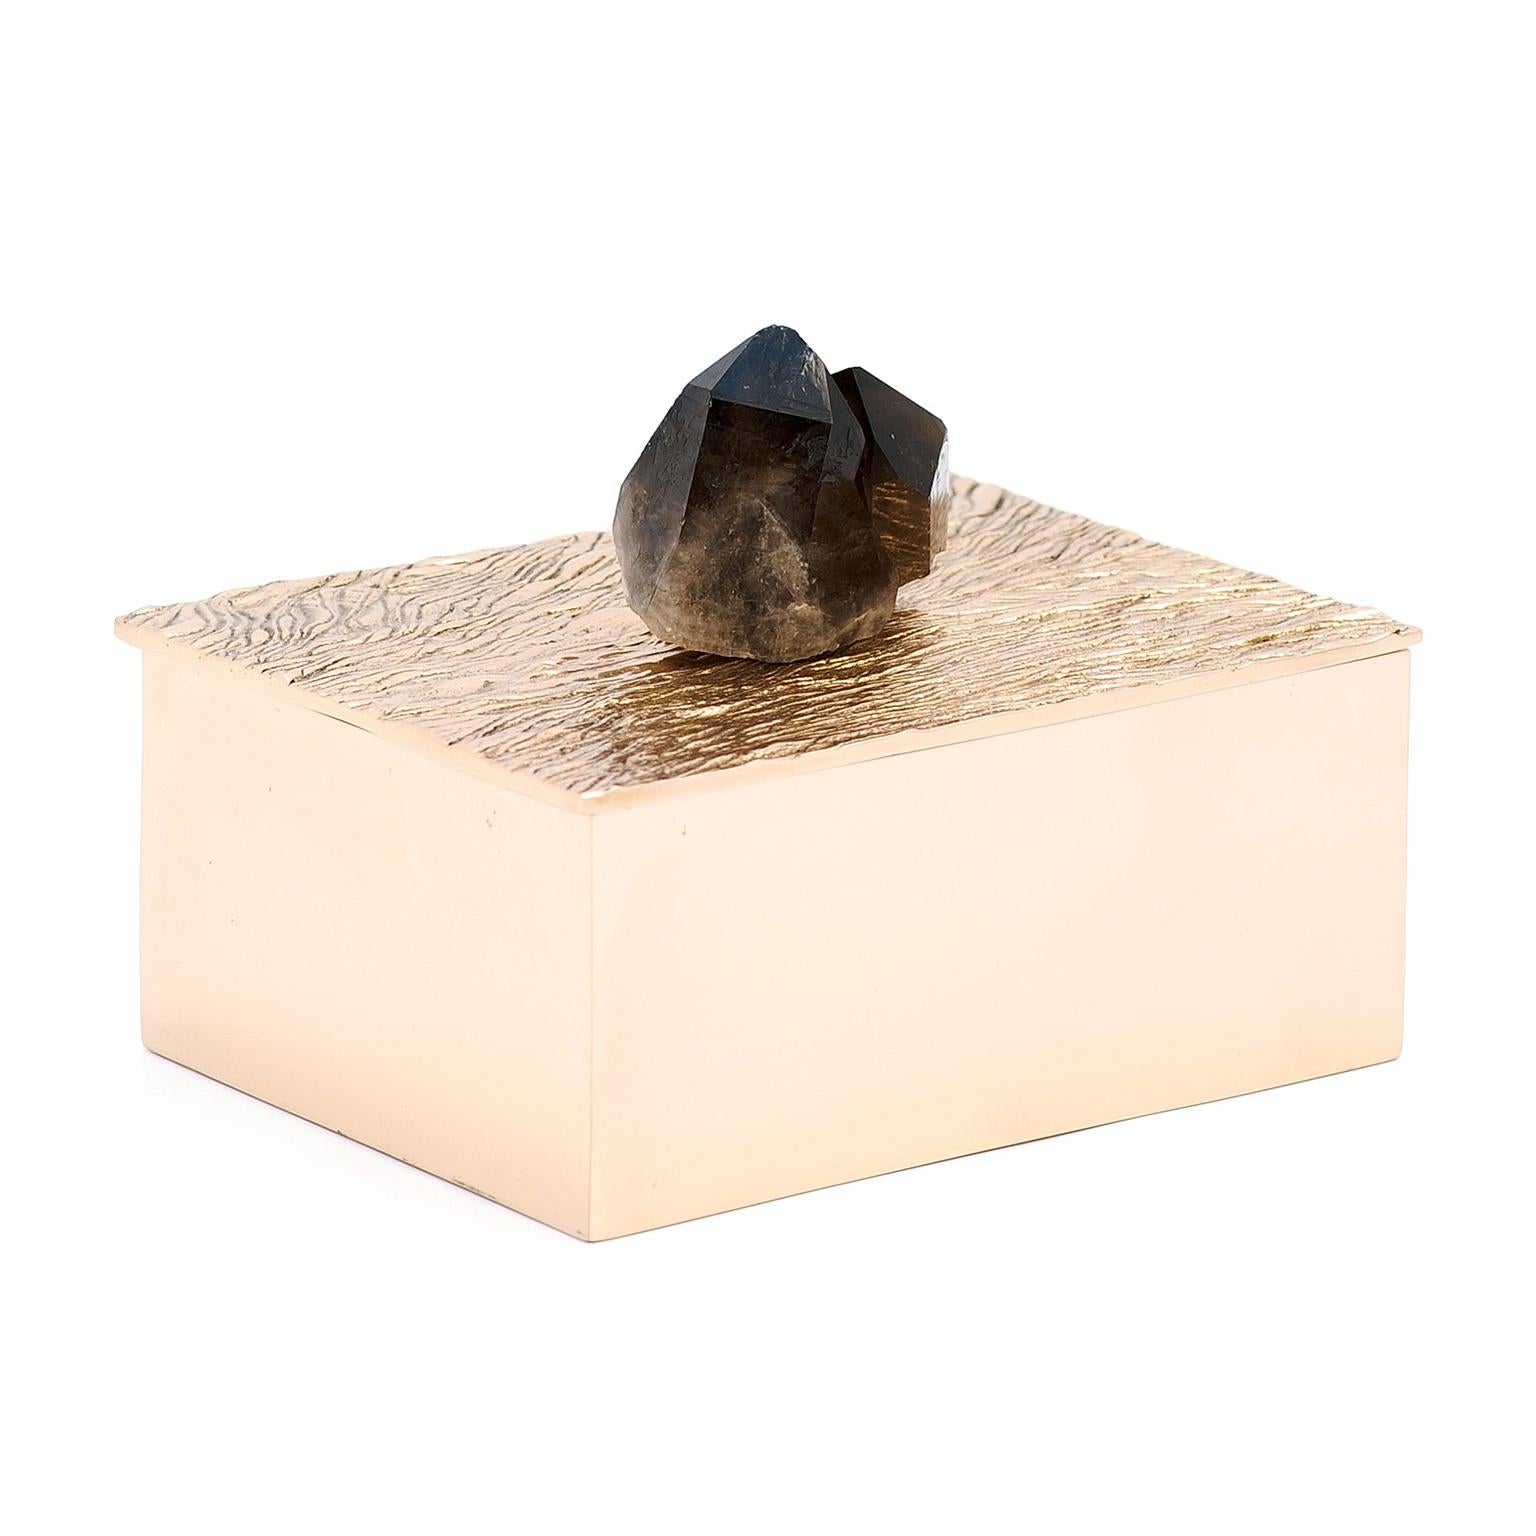 Nicks Box forged from cast bronze and black quarts by Fakasaka.